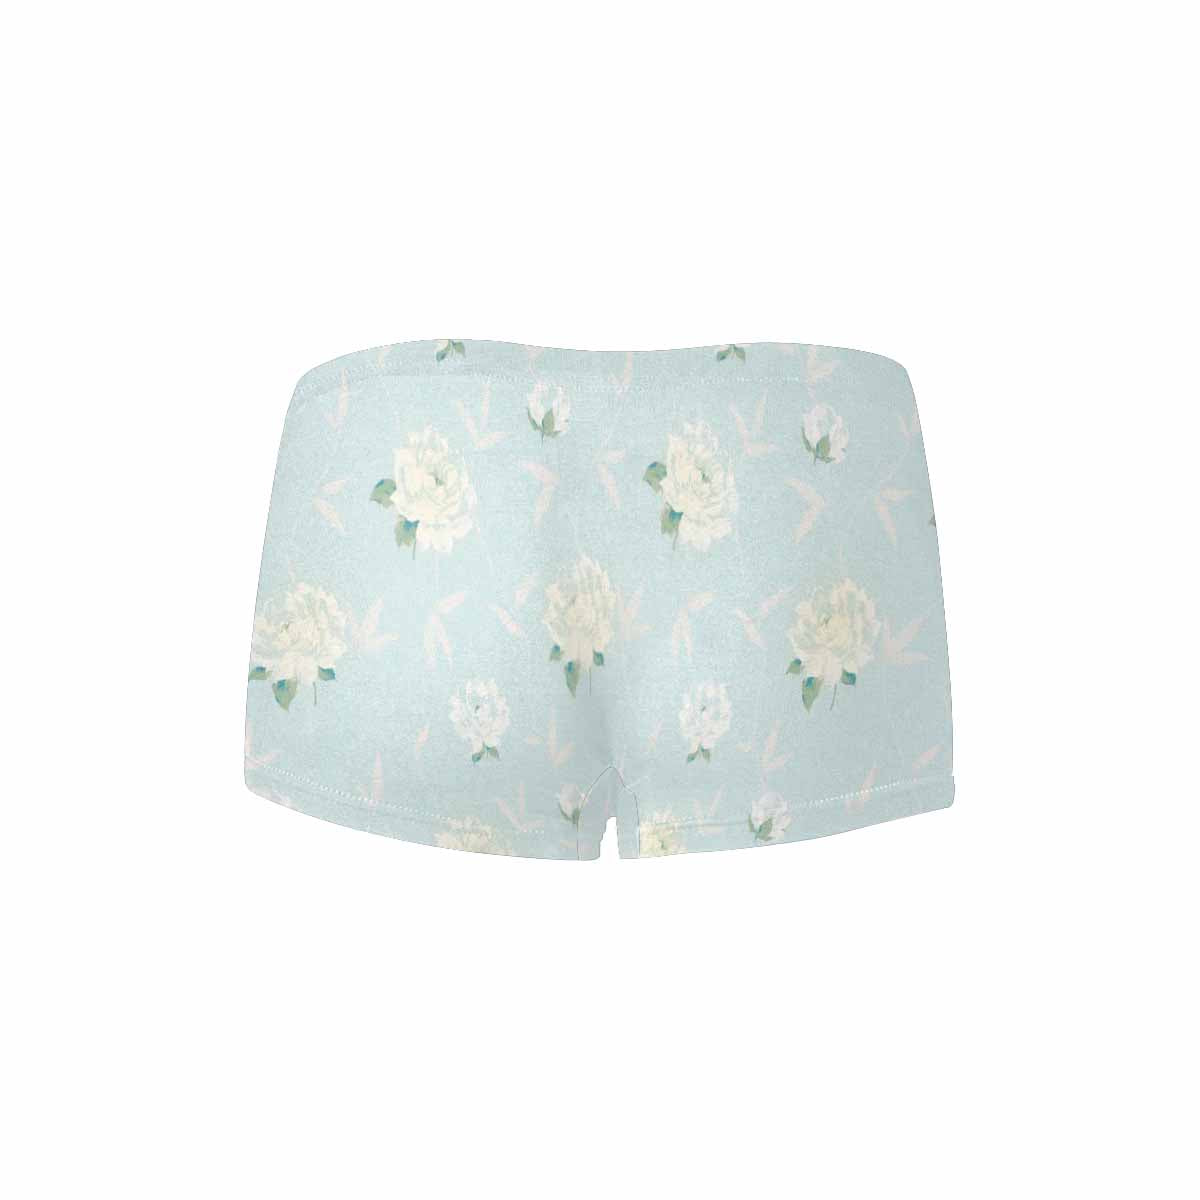 Floral 2, boyshorts, daisy dukes, pum pum shorts, panties, design 08